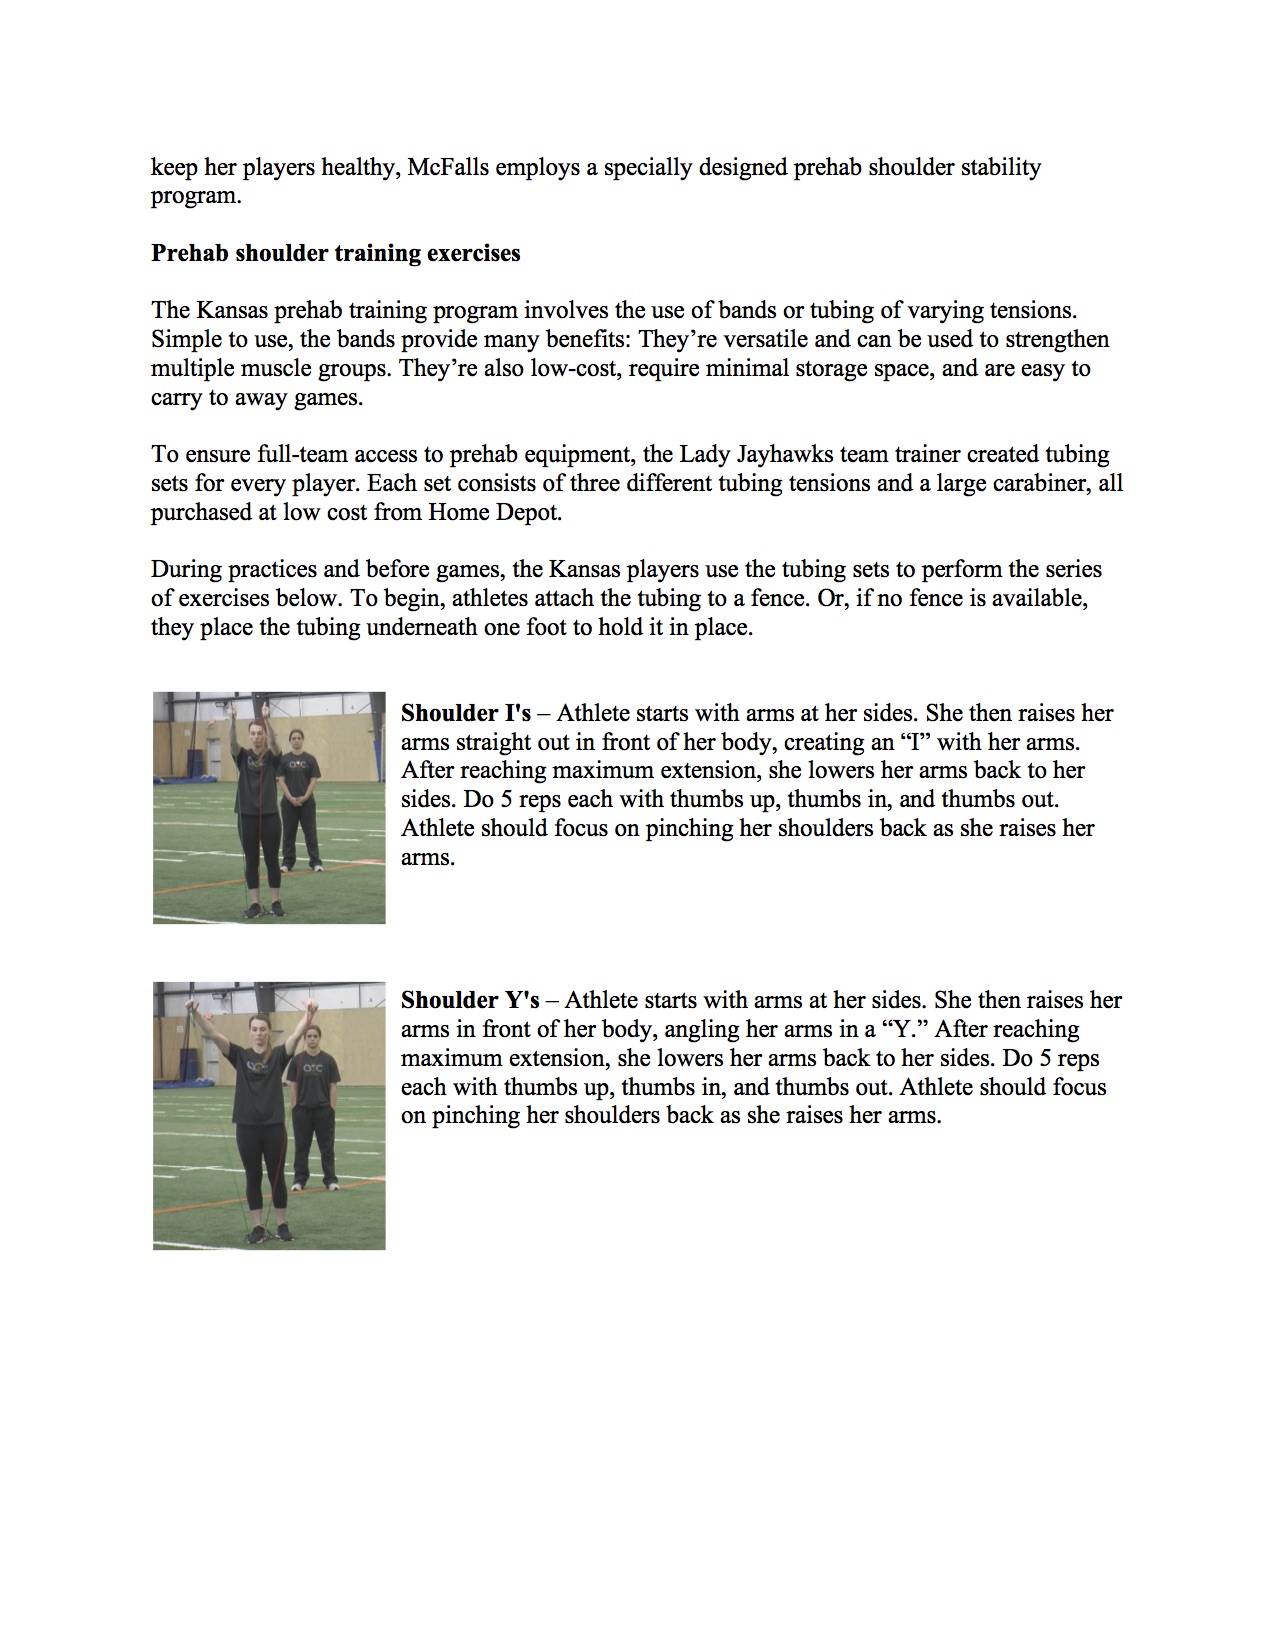 Blog Article, Softball Injuries page 2